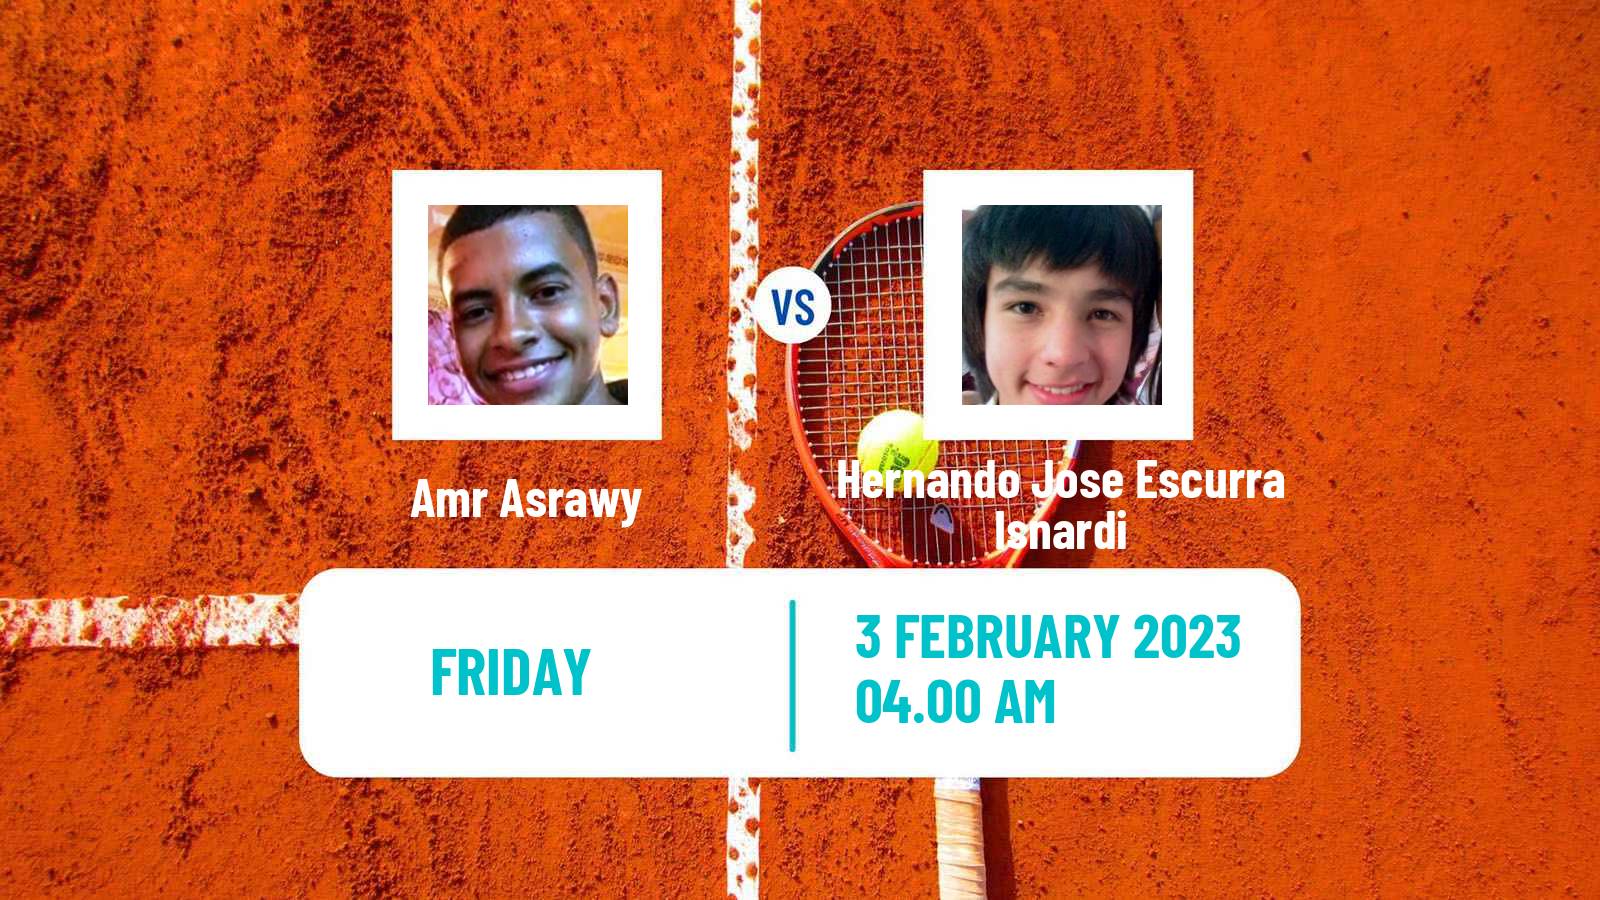 Tennis Davis Cup World Group II Amr Asrawy - Hernando Jose Escurra Isnardi